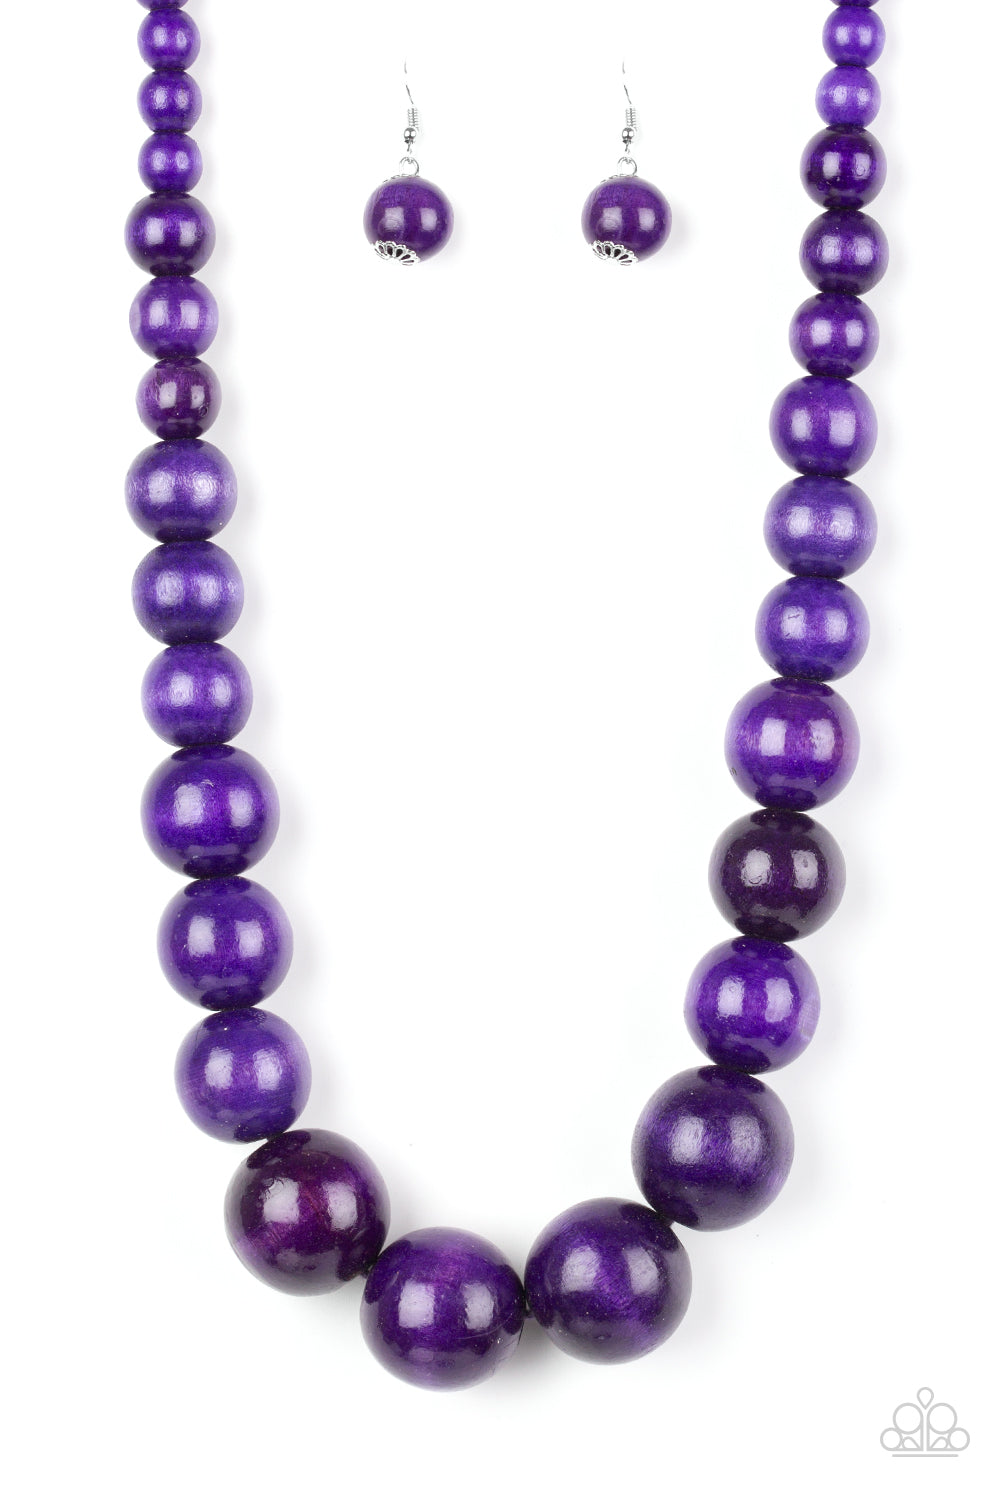 Effortlessly Everglades Purple Paparazzi Necklaces Cashmere Pink Jewels - Cashmere Pink Jewels & Accessories, Cashmere Pink Jewels & Accessories - Paparazzi